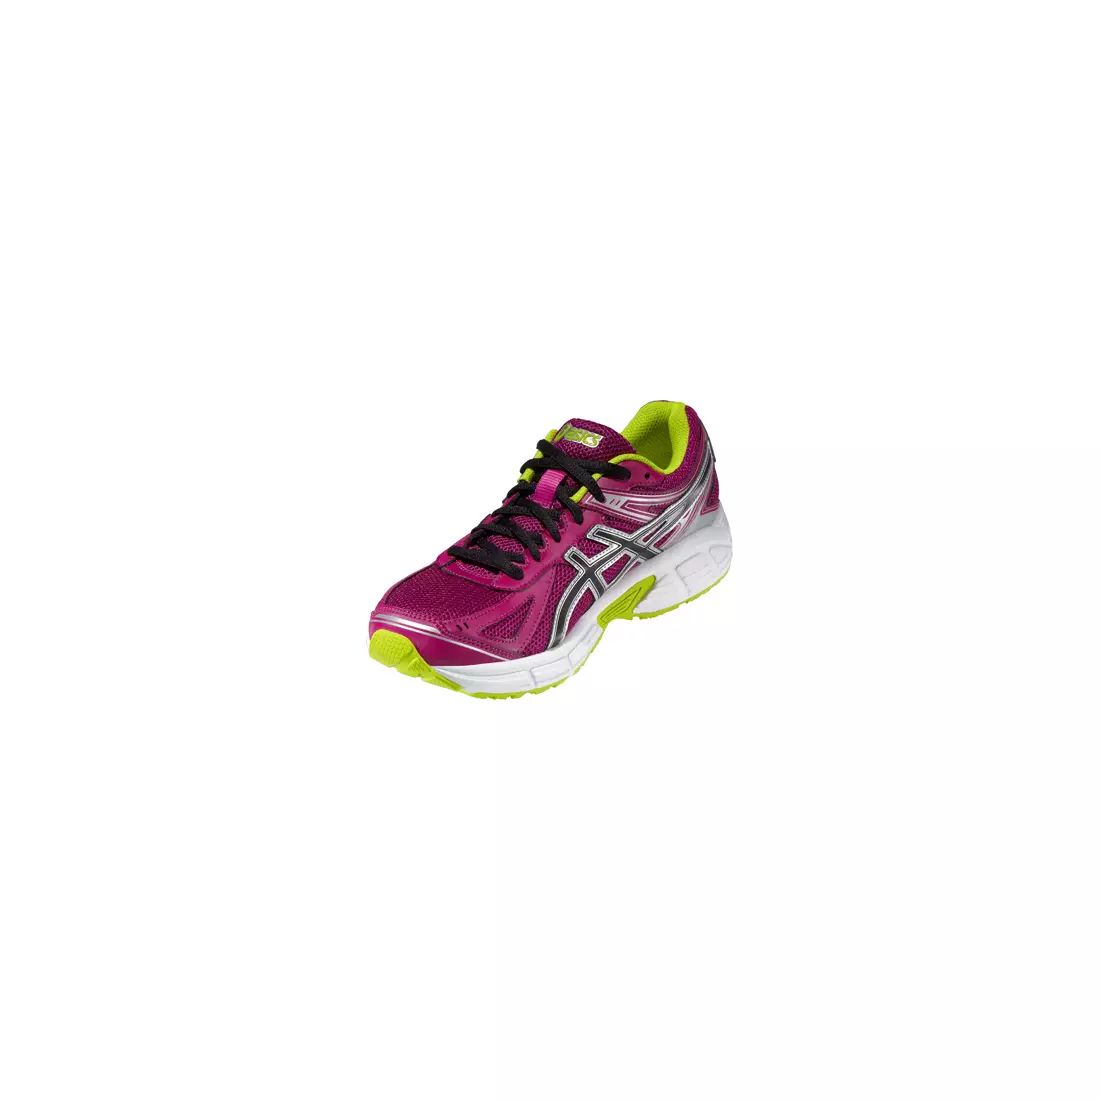 ASICS PATRIOT 7 women's running shoes 3390